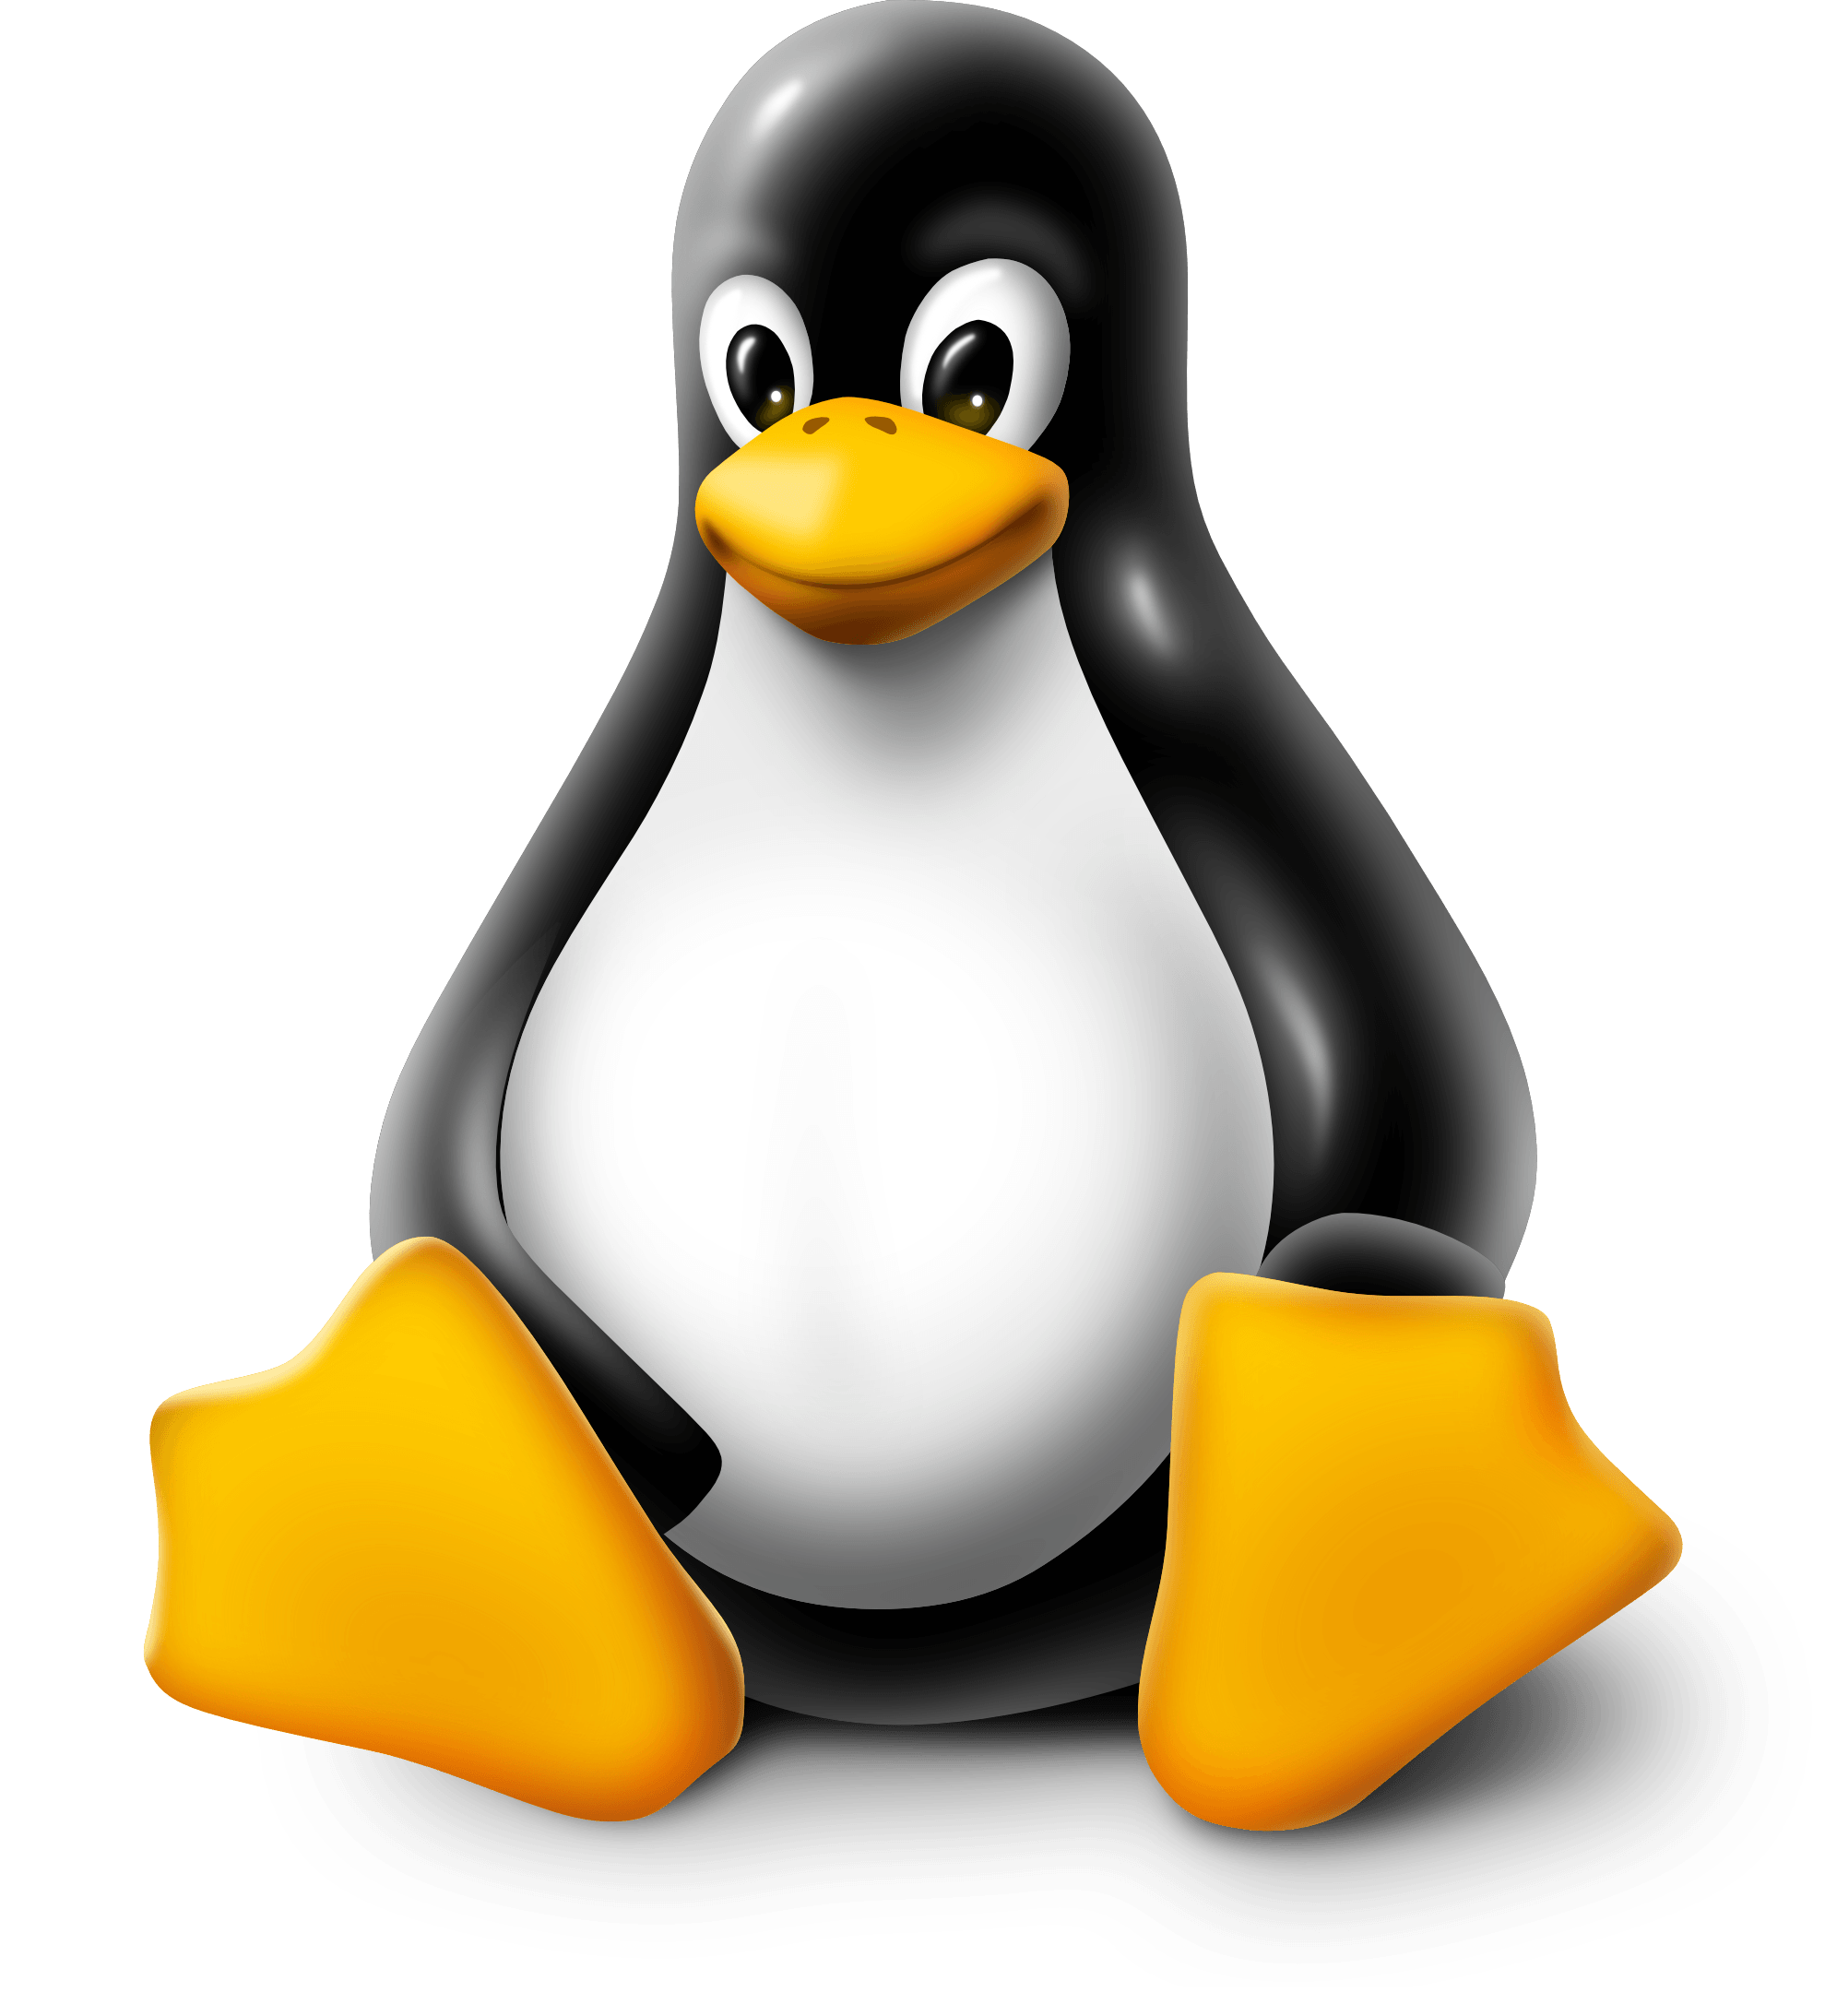 Linux Server Logo - Tips for Gaming on Linux